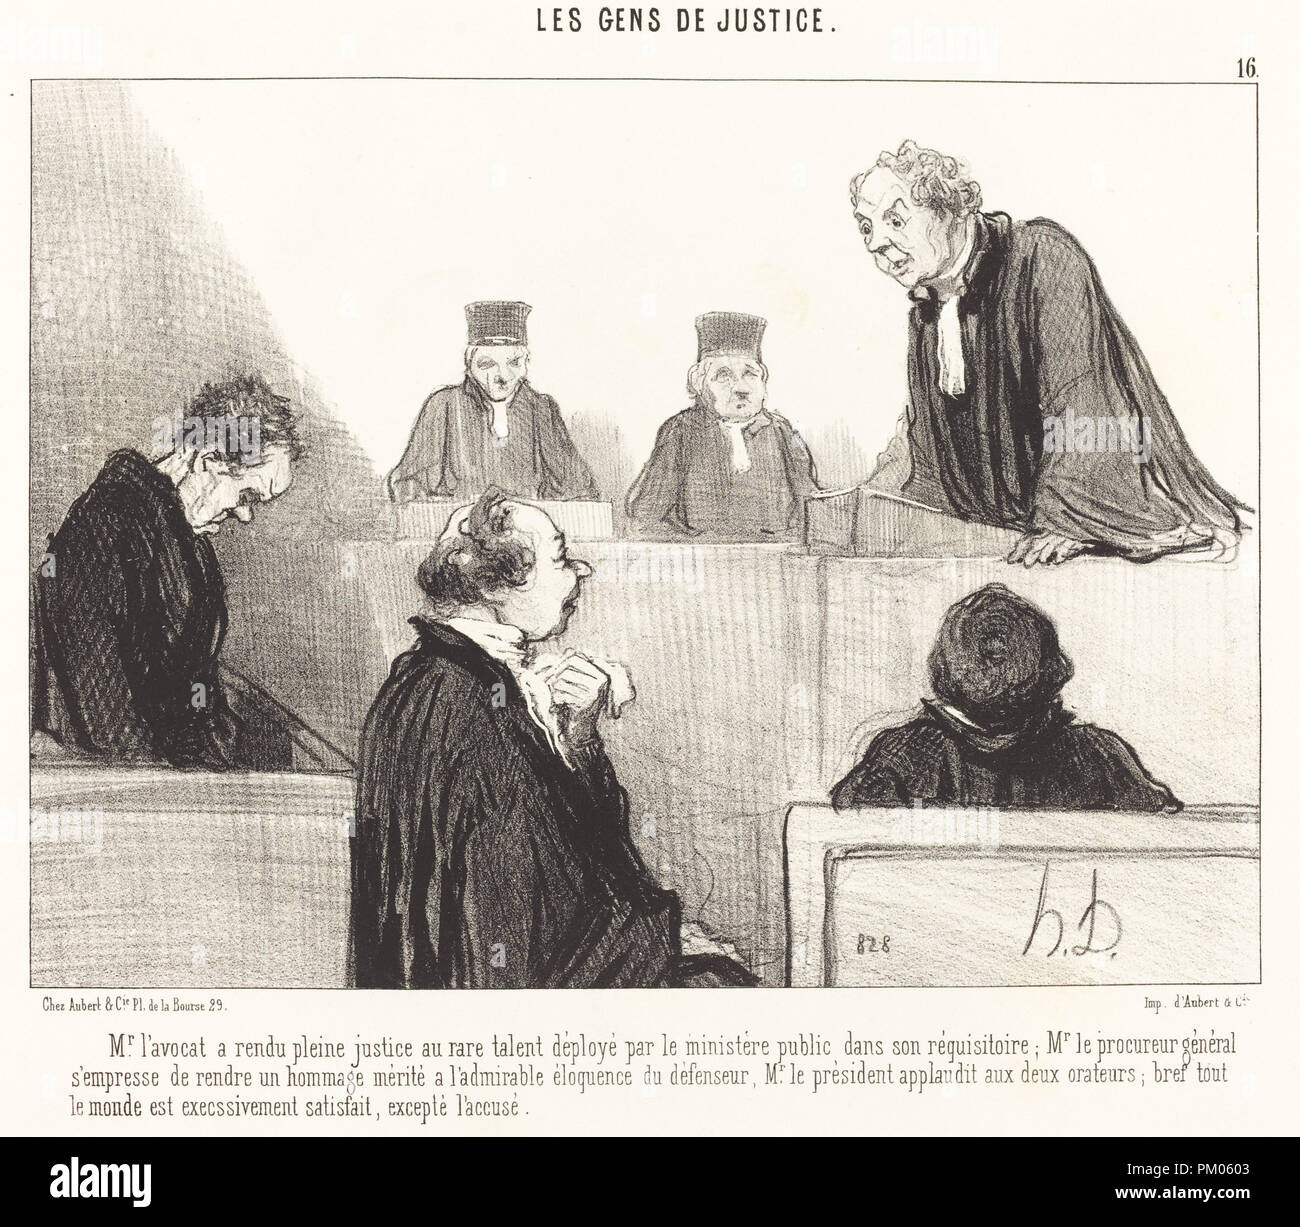 Il sig. l'avocat un rendu pleine giustizia... Data: 1846. Medium: litografia. Museo: National Gallery of Art di Washington DC. Autore: Honoré Daumier. Foto Stock